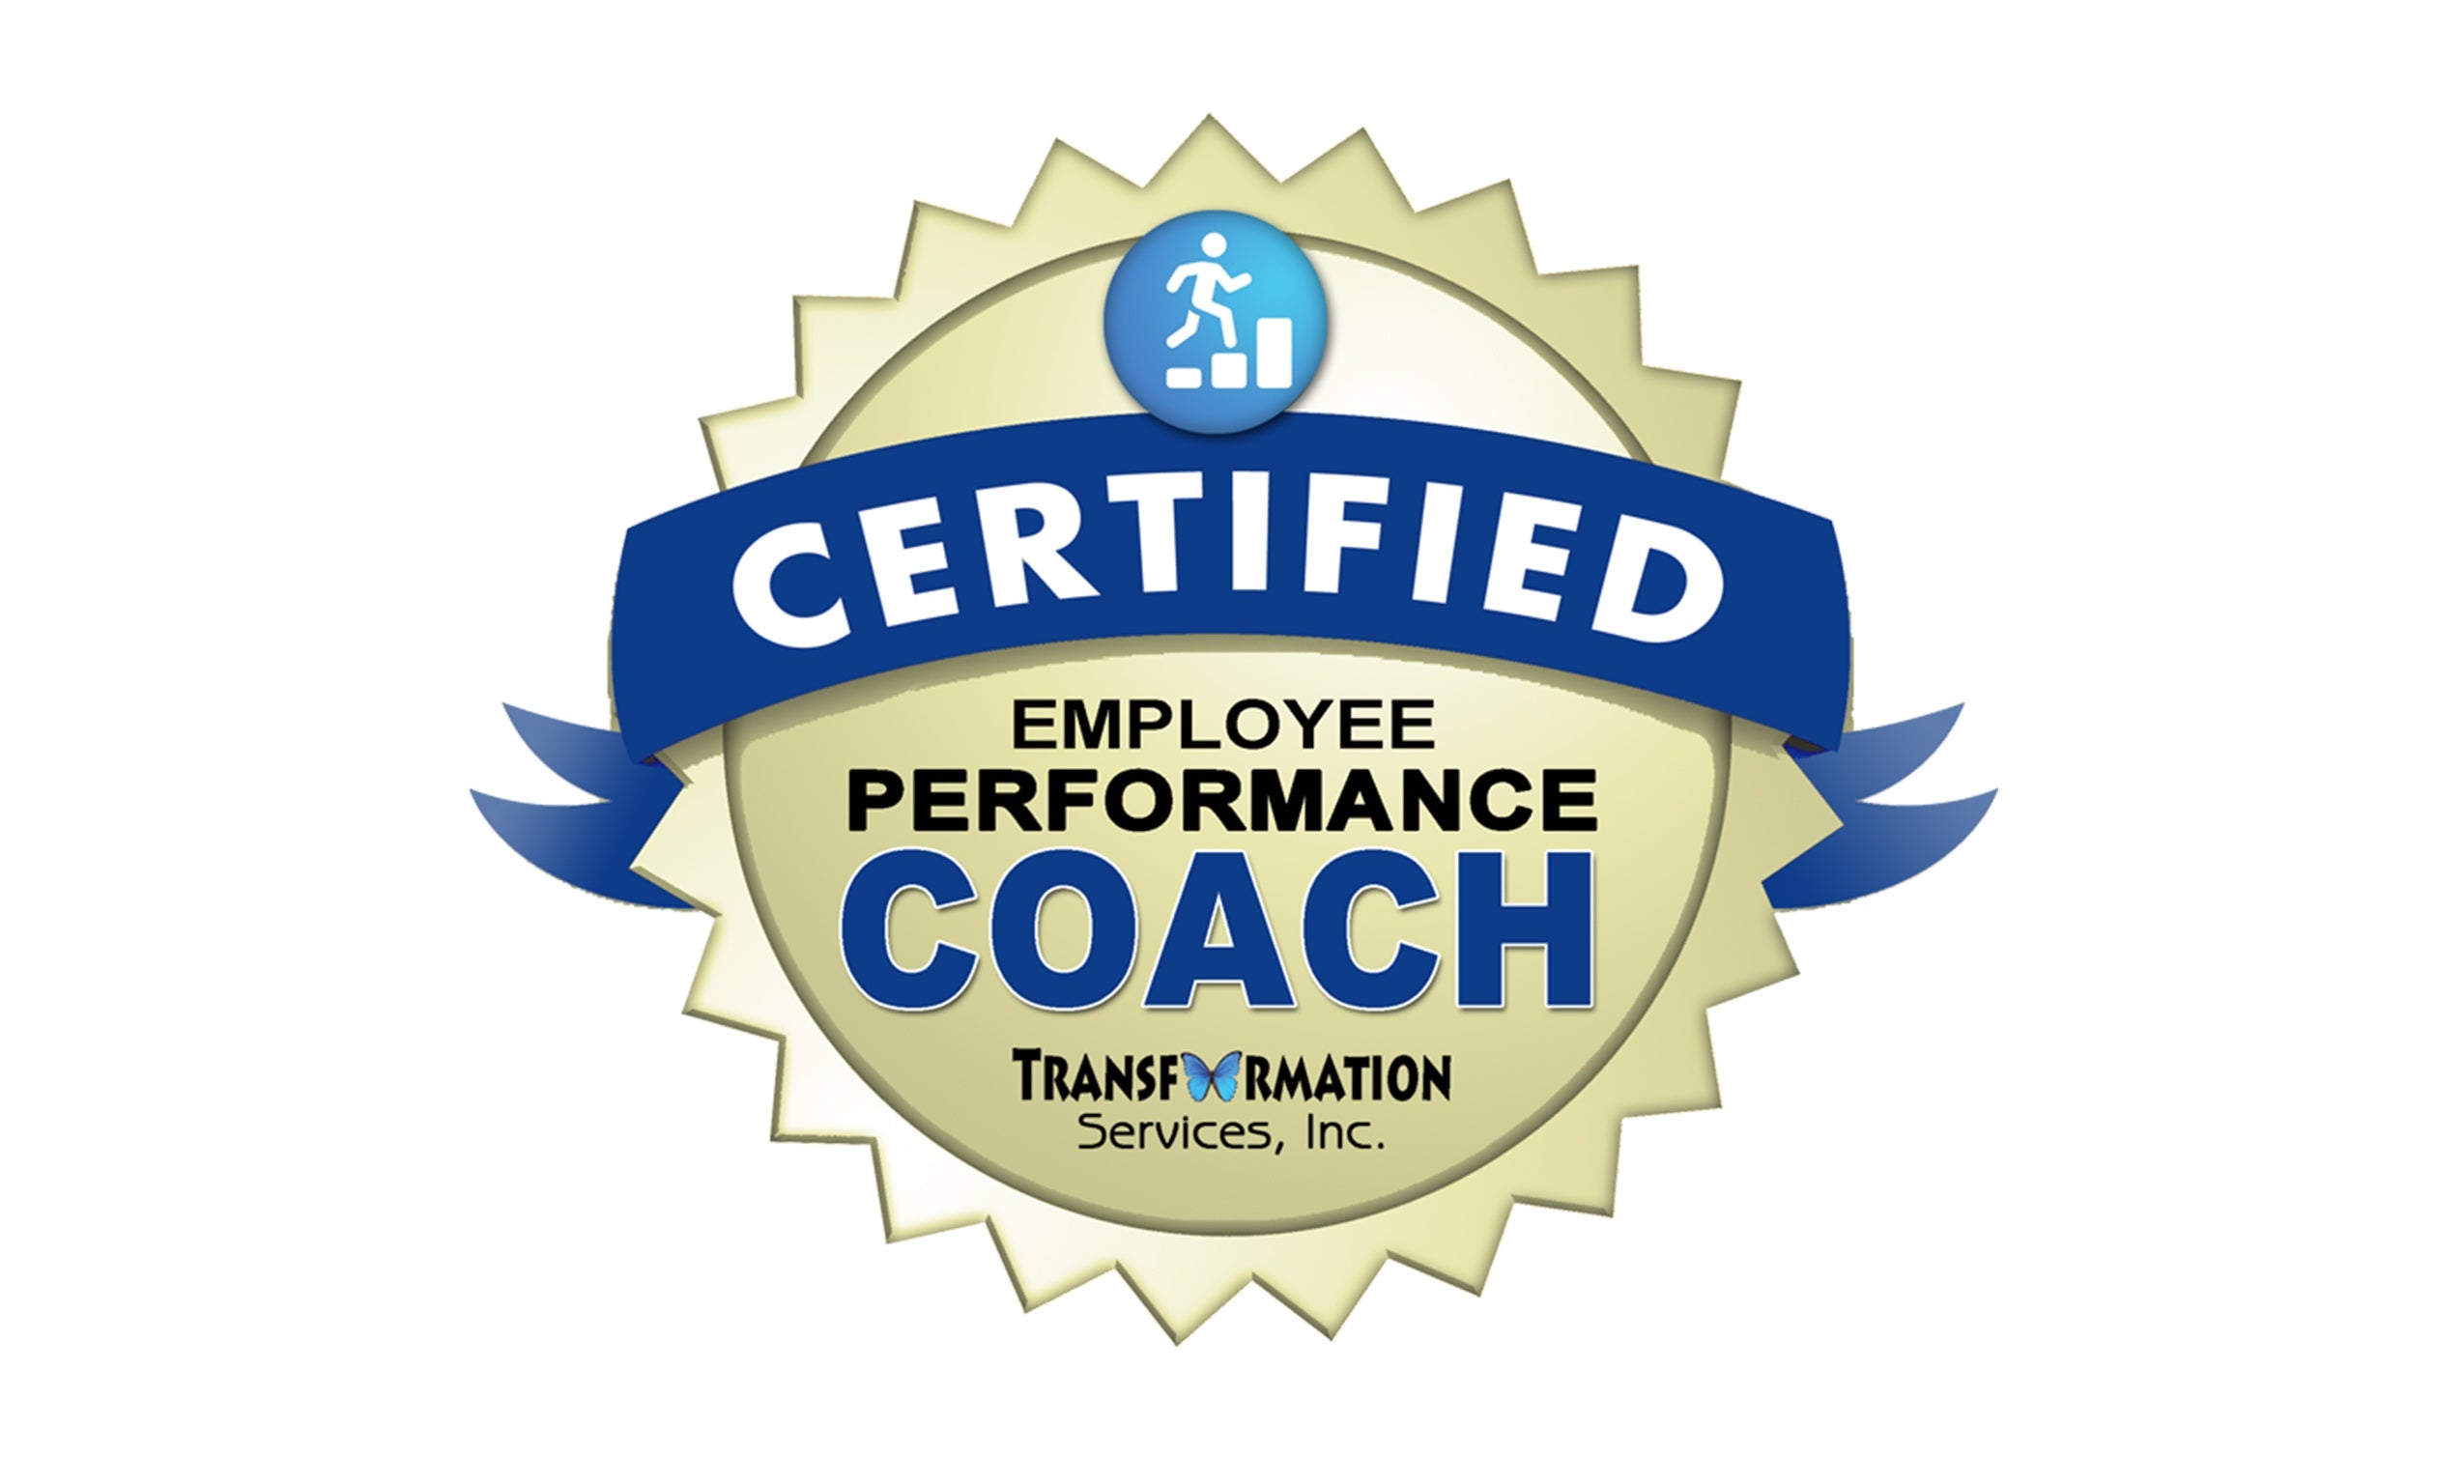 Employee Performance Coach Certification